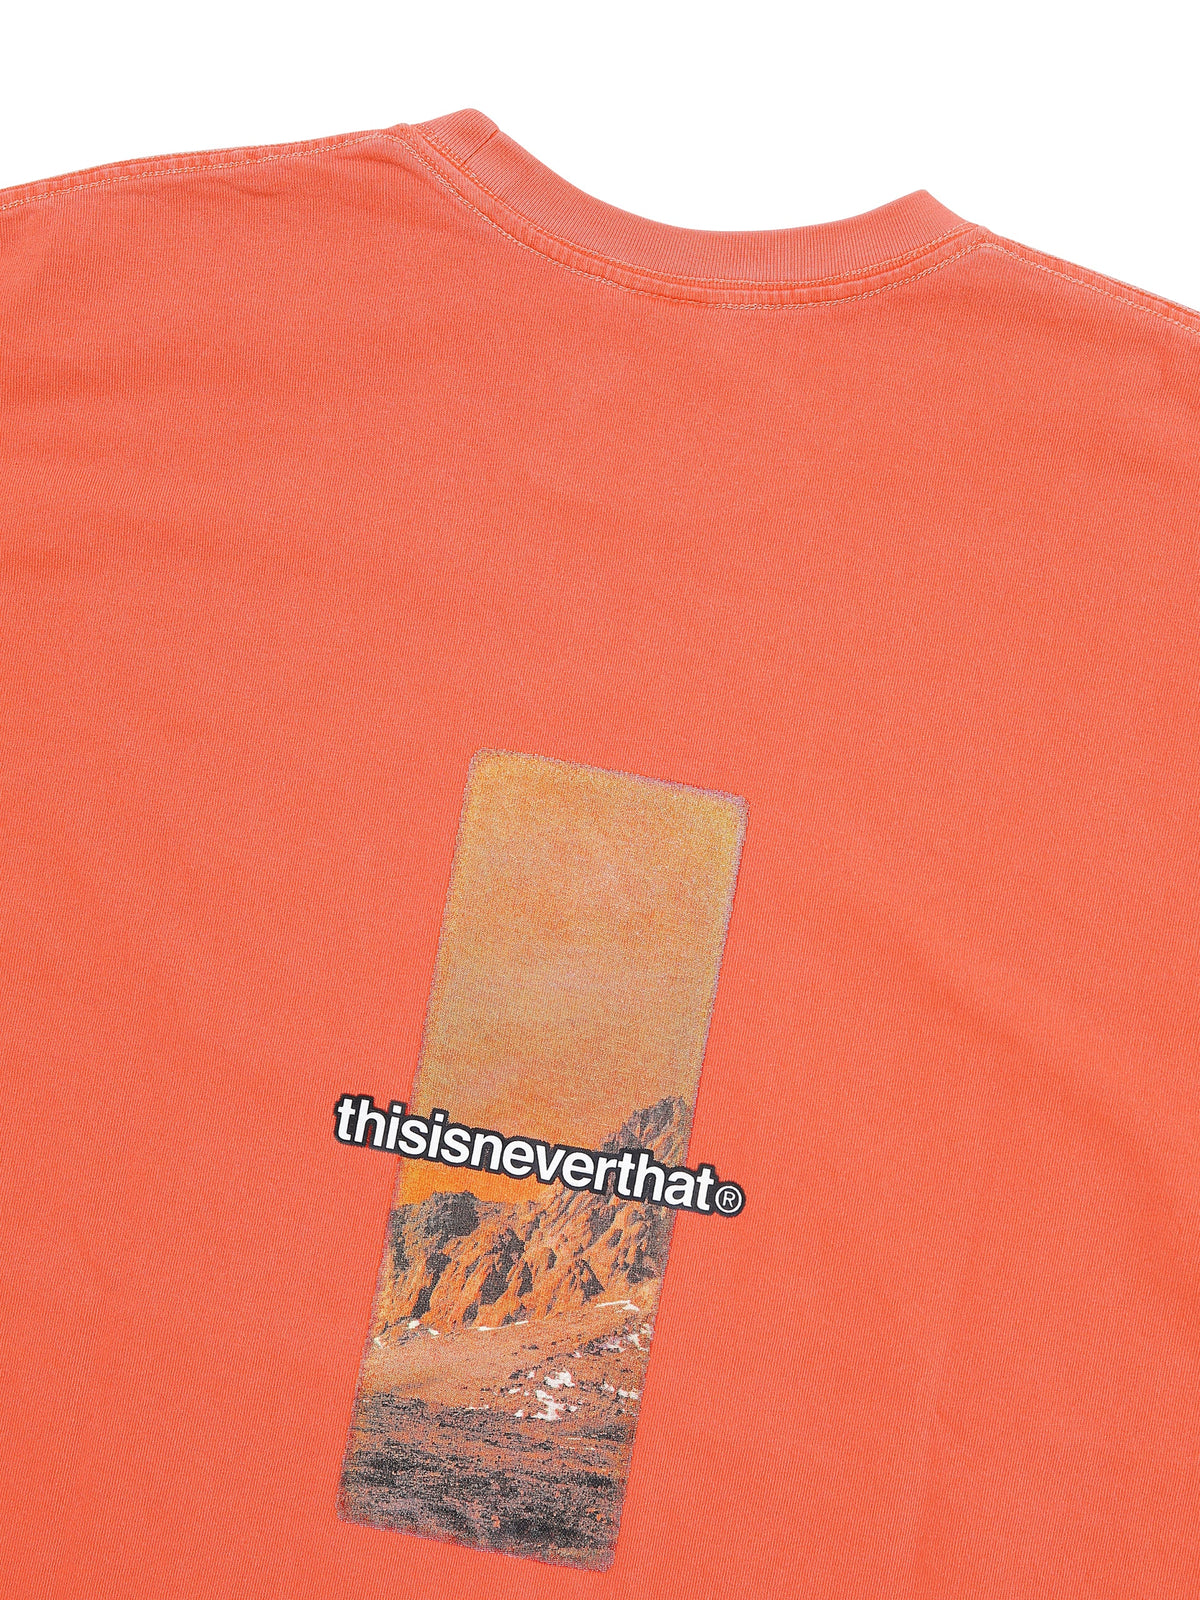 Overdyed Mars Tee T-Shirt 